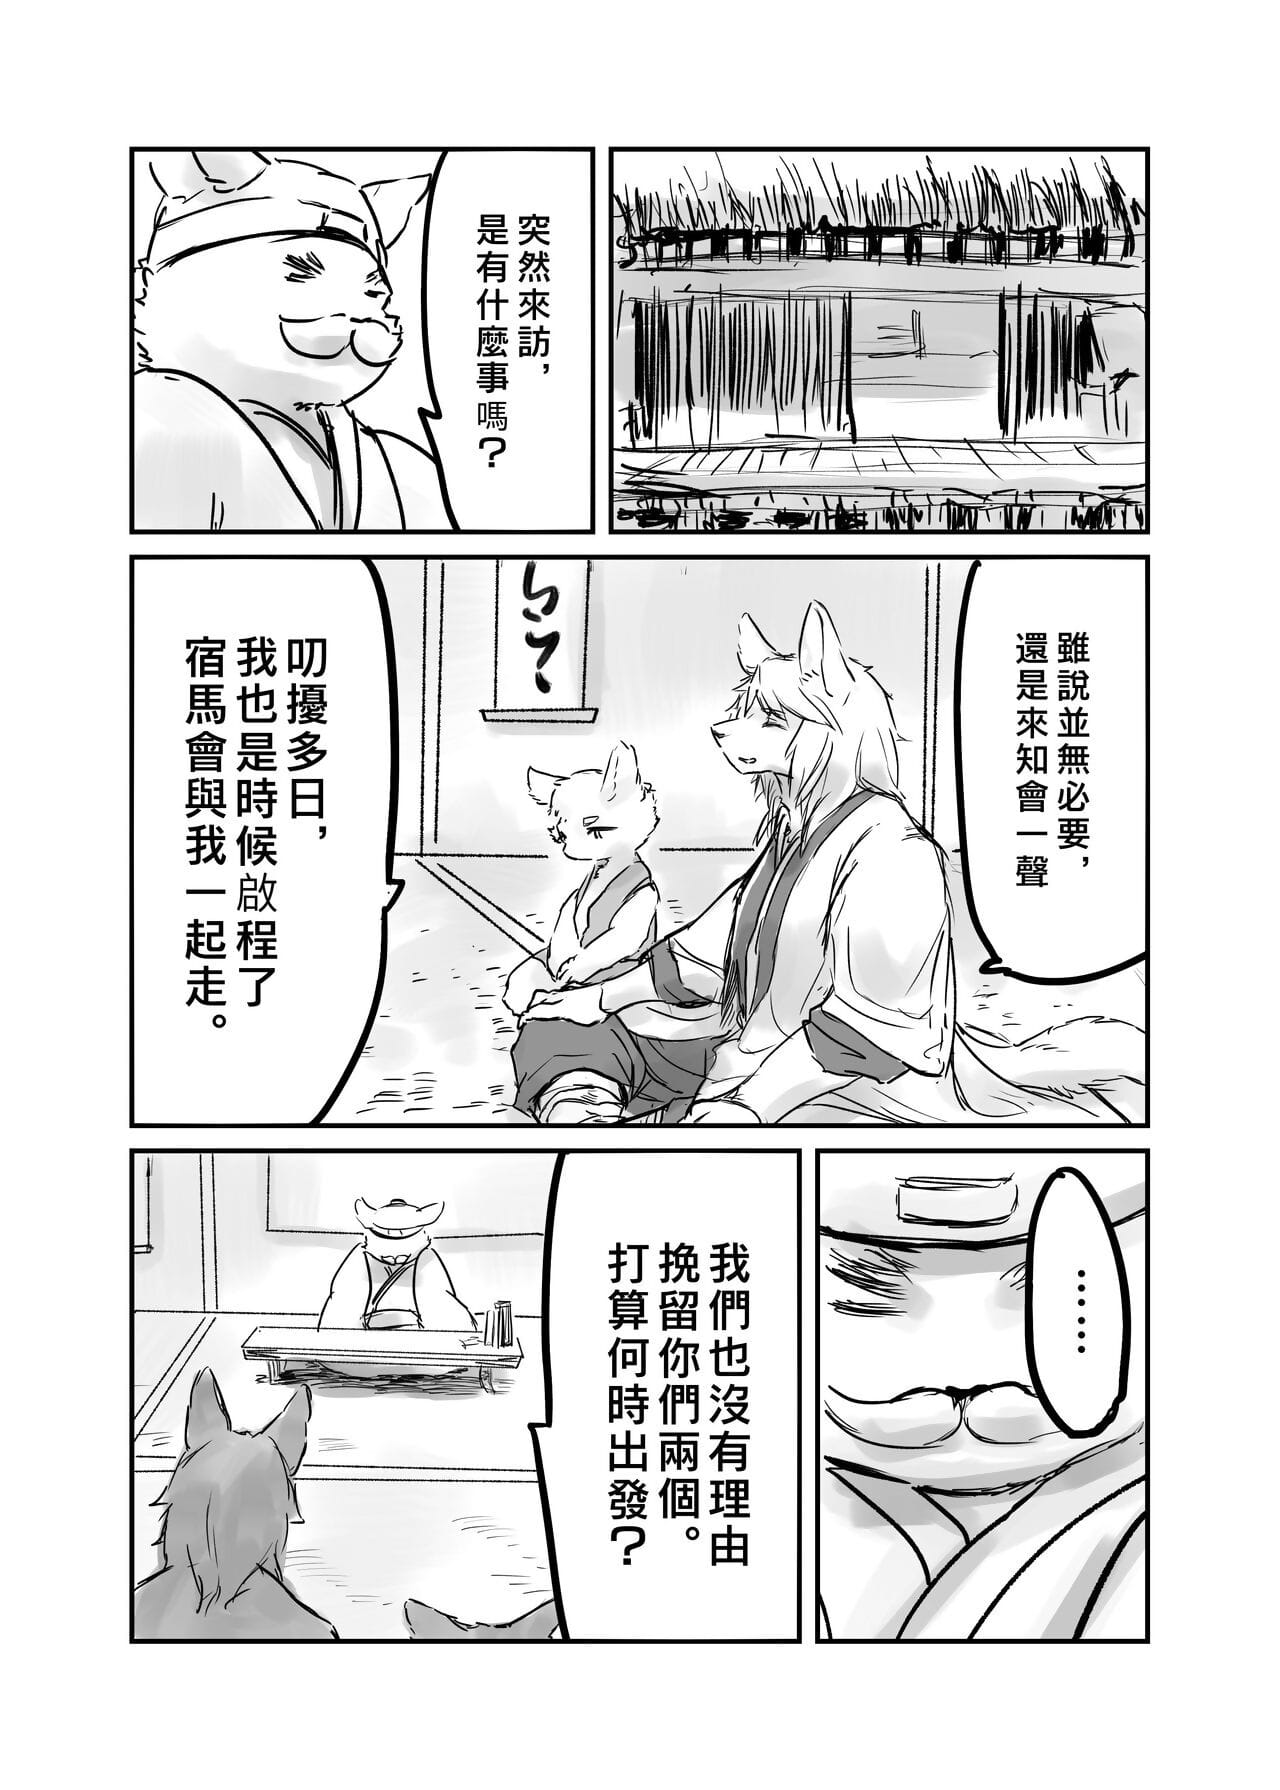 （the Посетитель 他乡之人 by：鬼流 часть 2 page 1